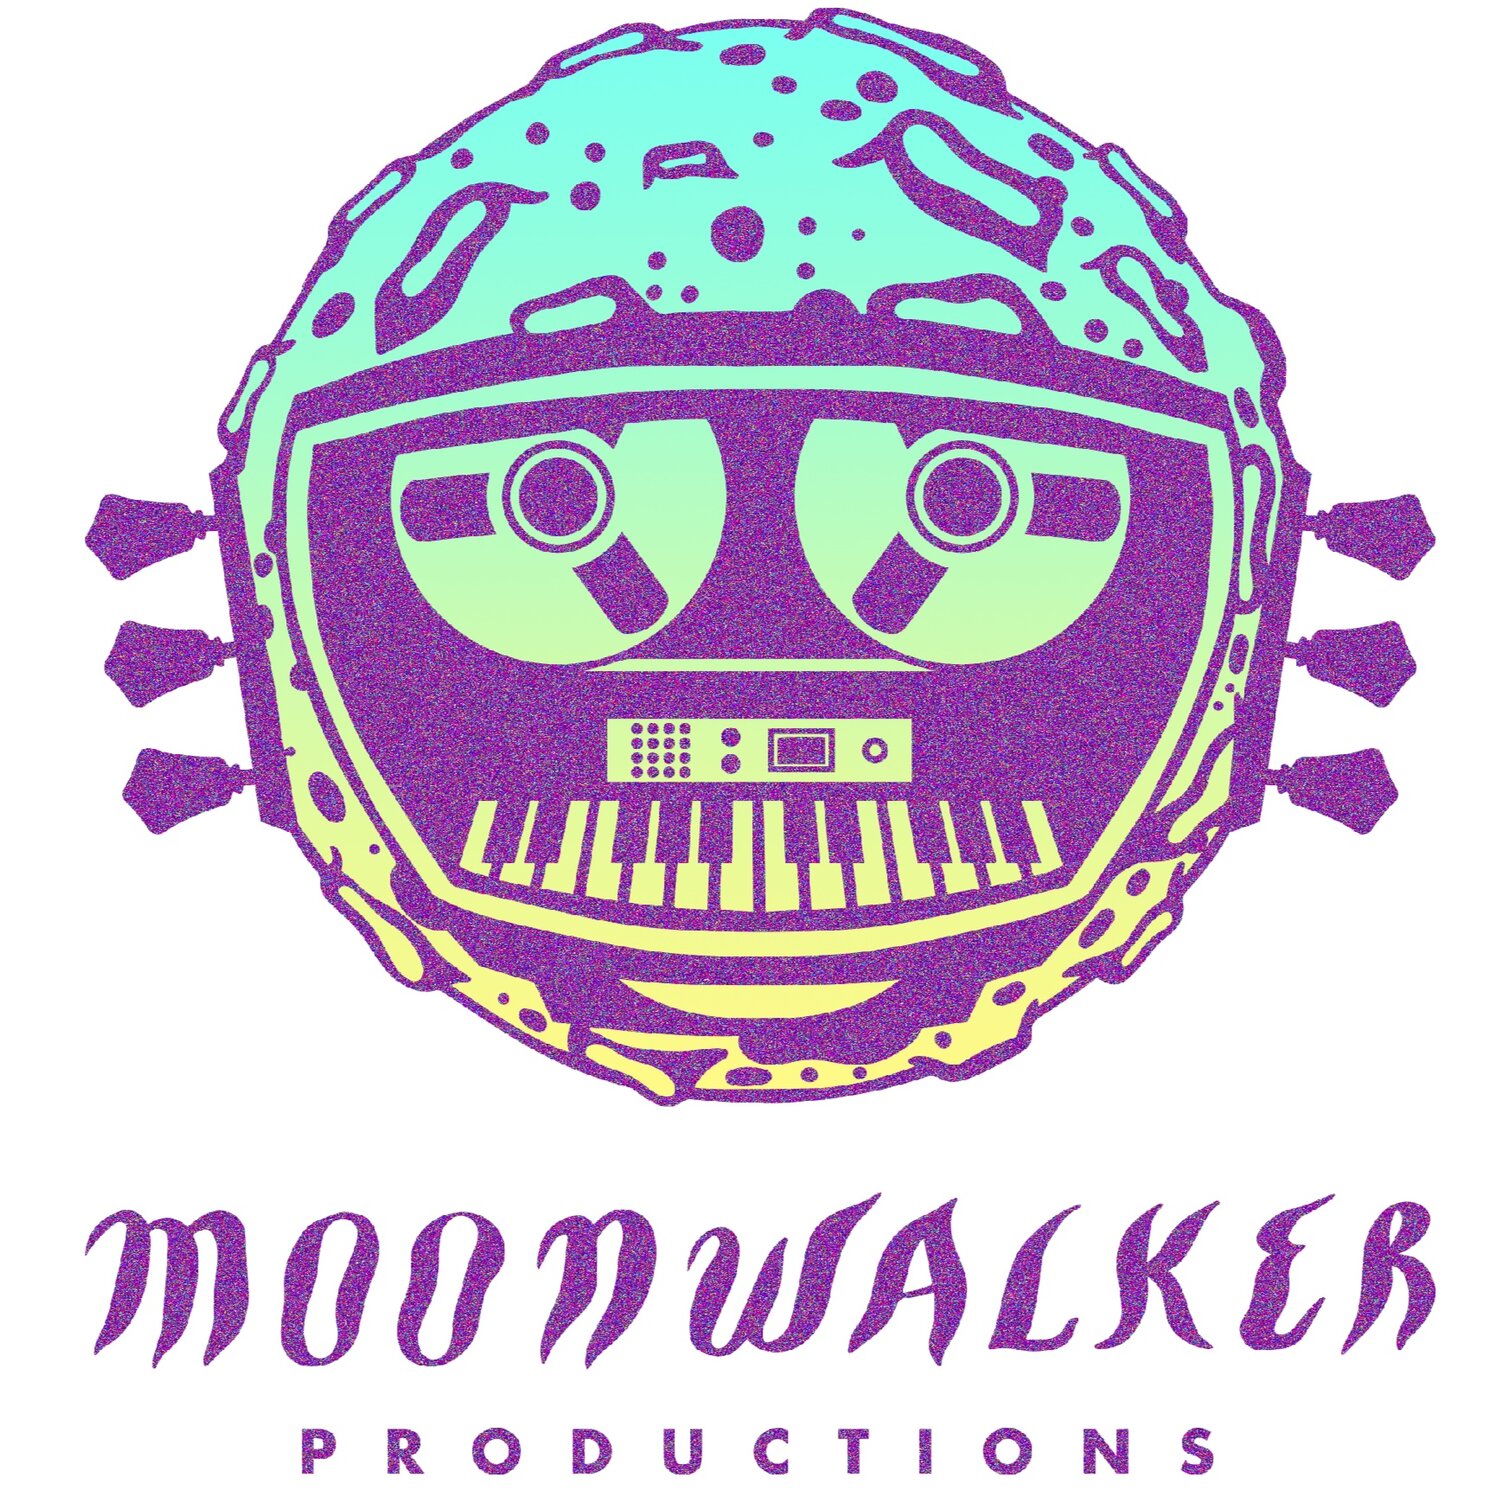 Moonwalker Productions